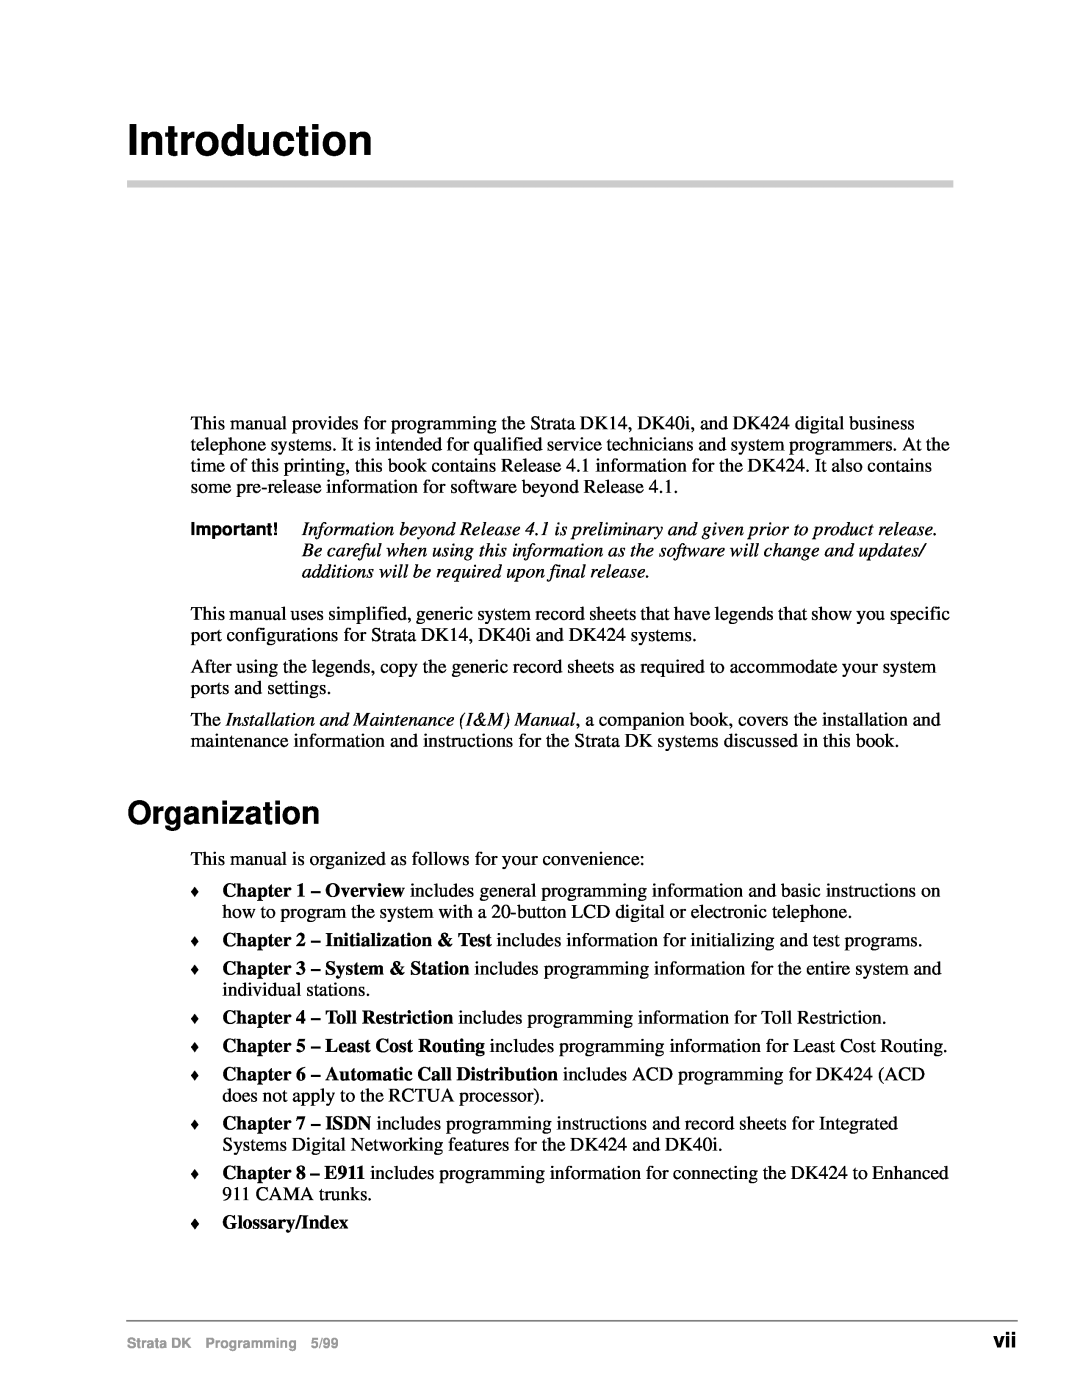 Toshiba dk14 manual Introduction, Organization 